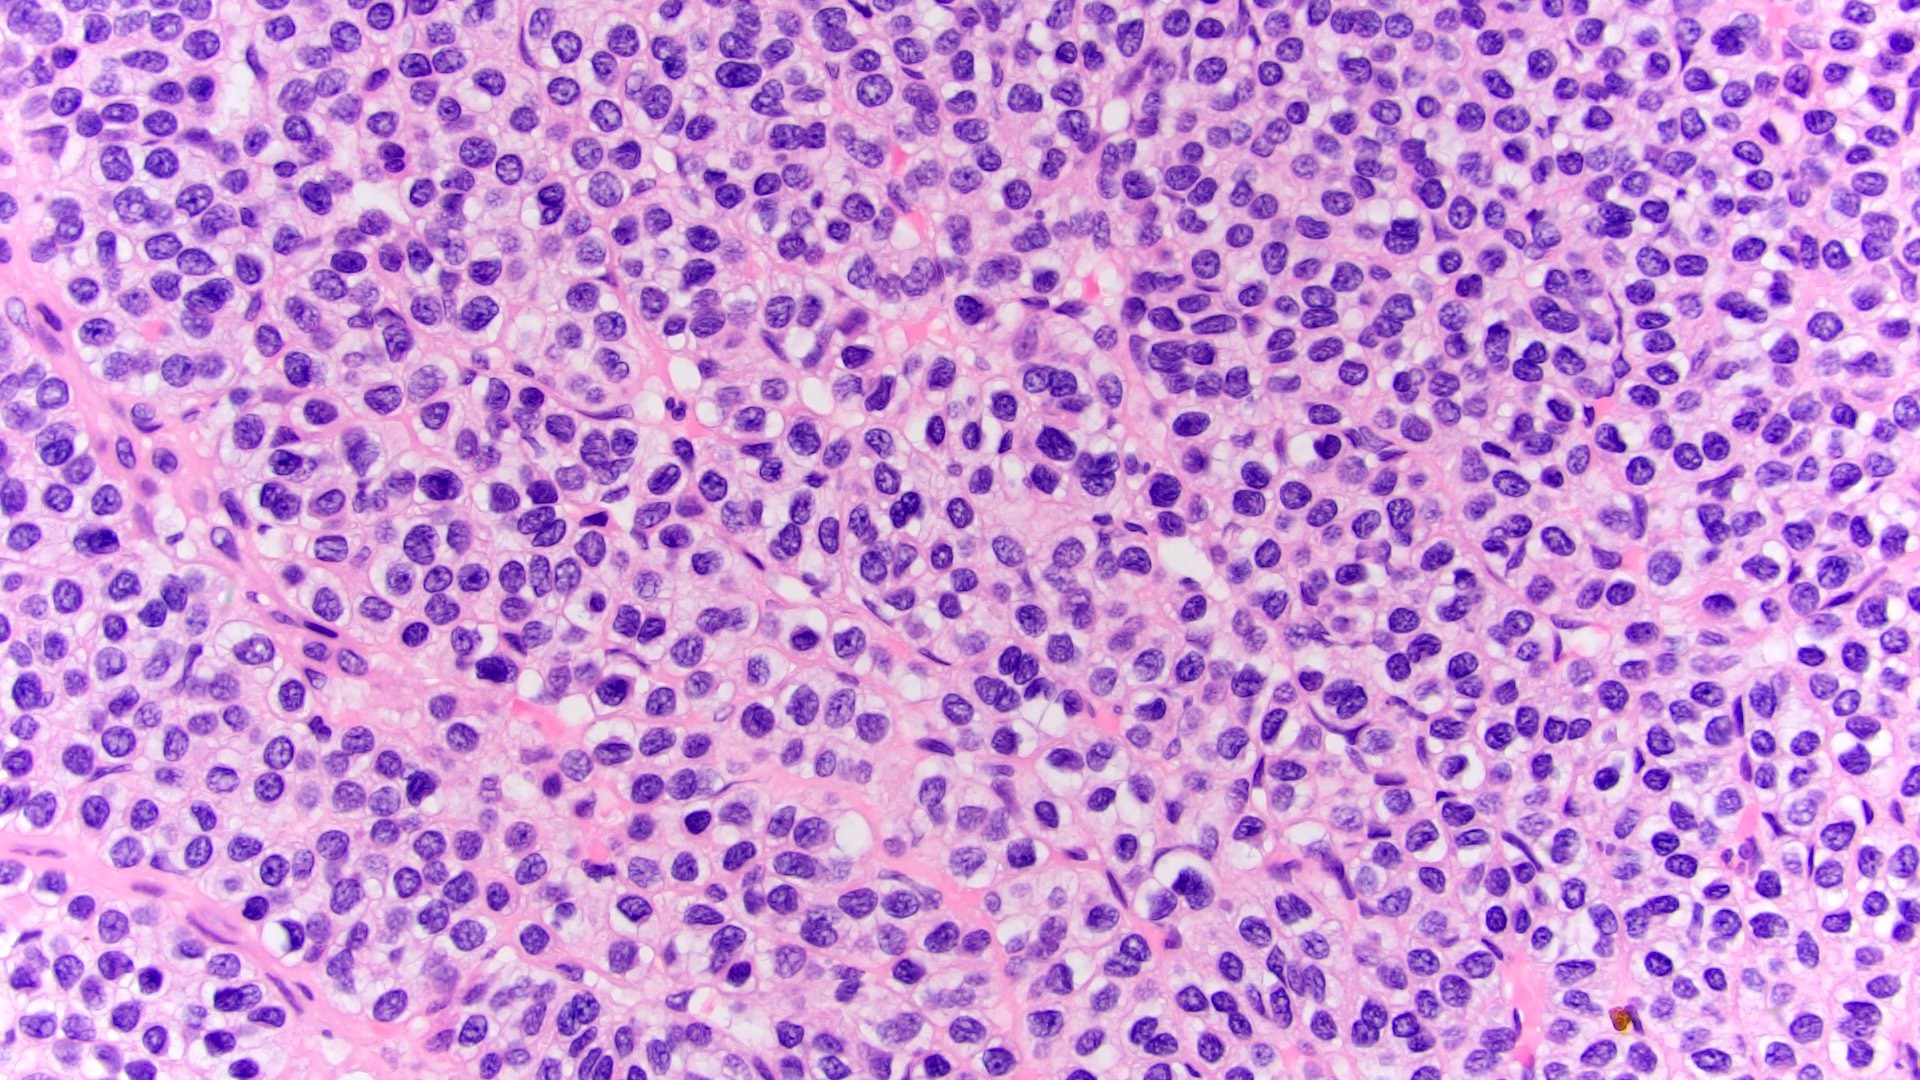 Small uniform tumor cells